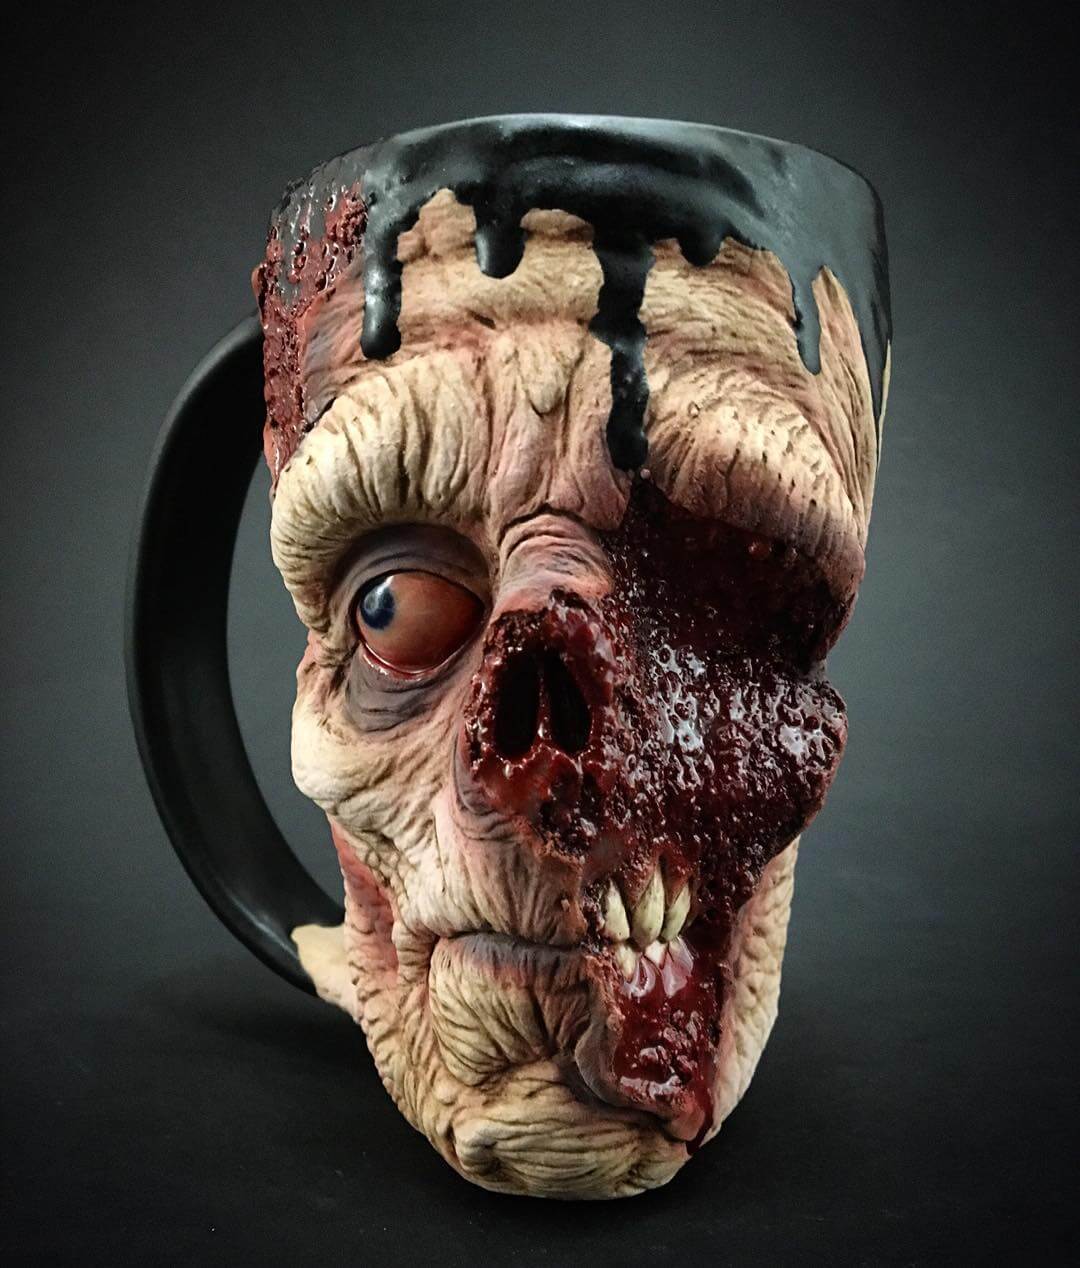 horror-zombie-mug-turkey-meck-fy-8